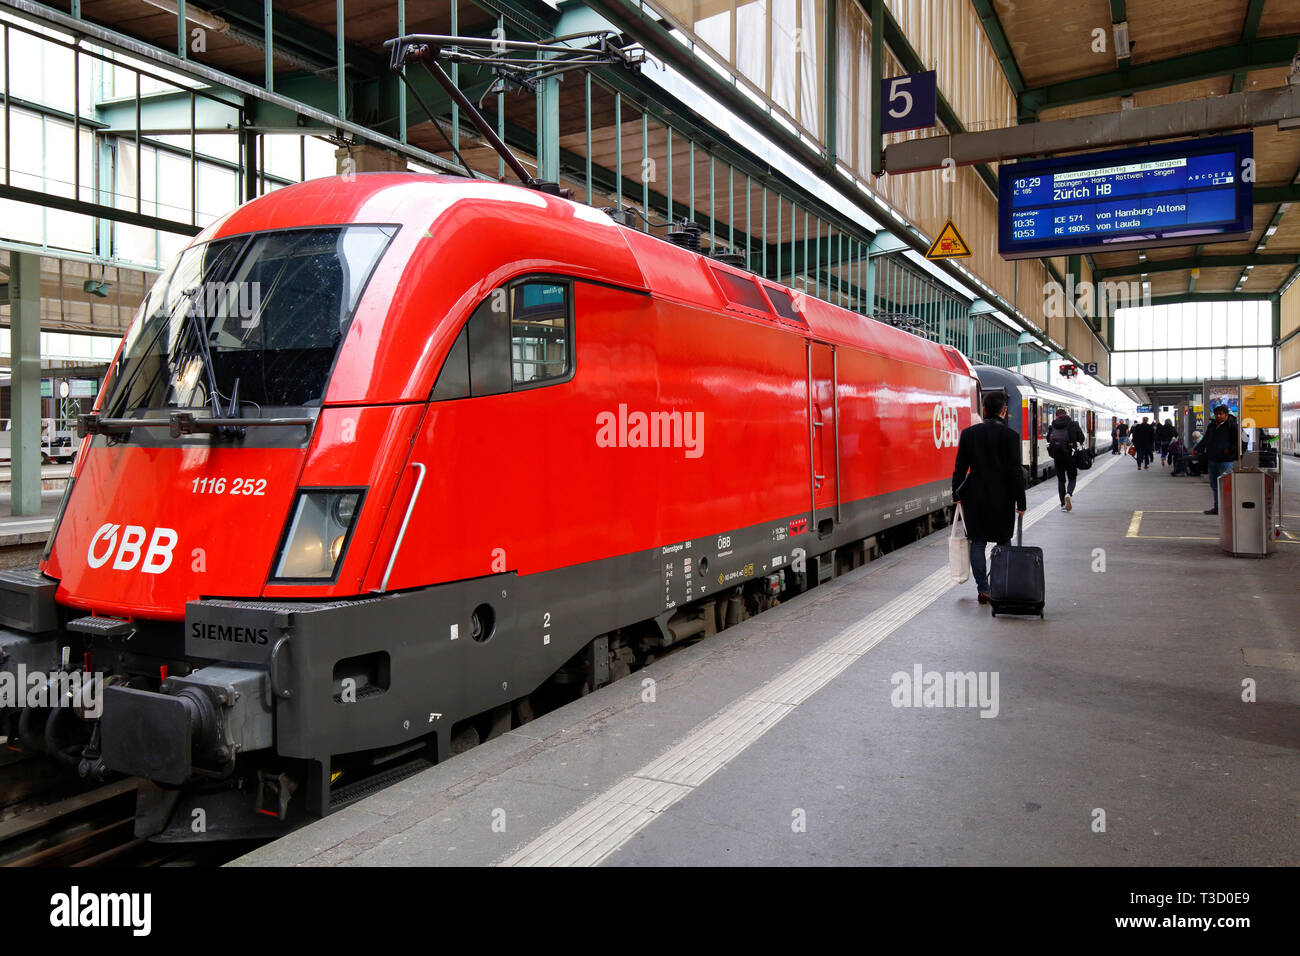 Tren OBB con destino a Zúrich en Stuttgart Hauptbahnhof, Alemania Foto de stock